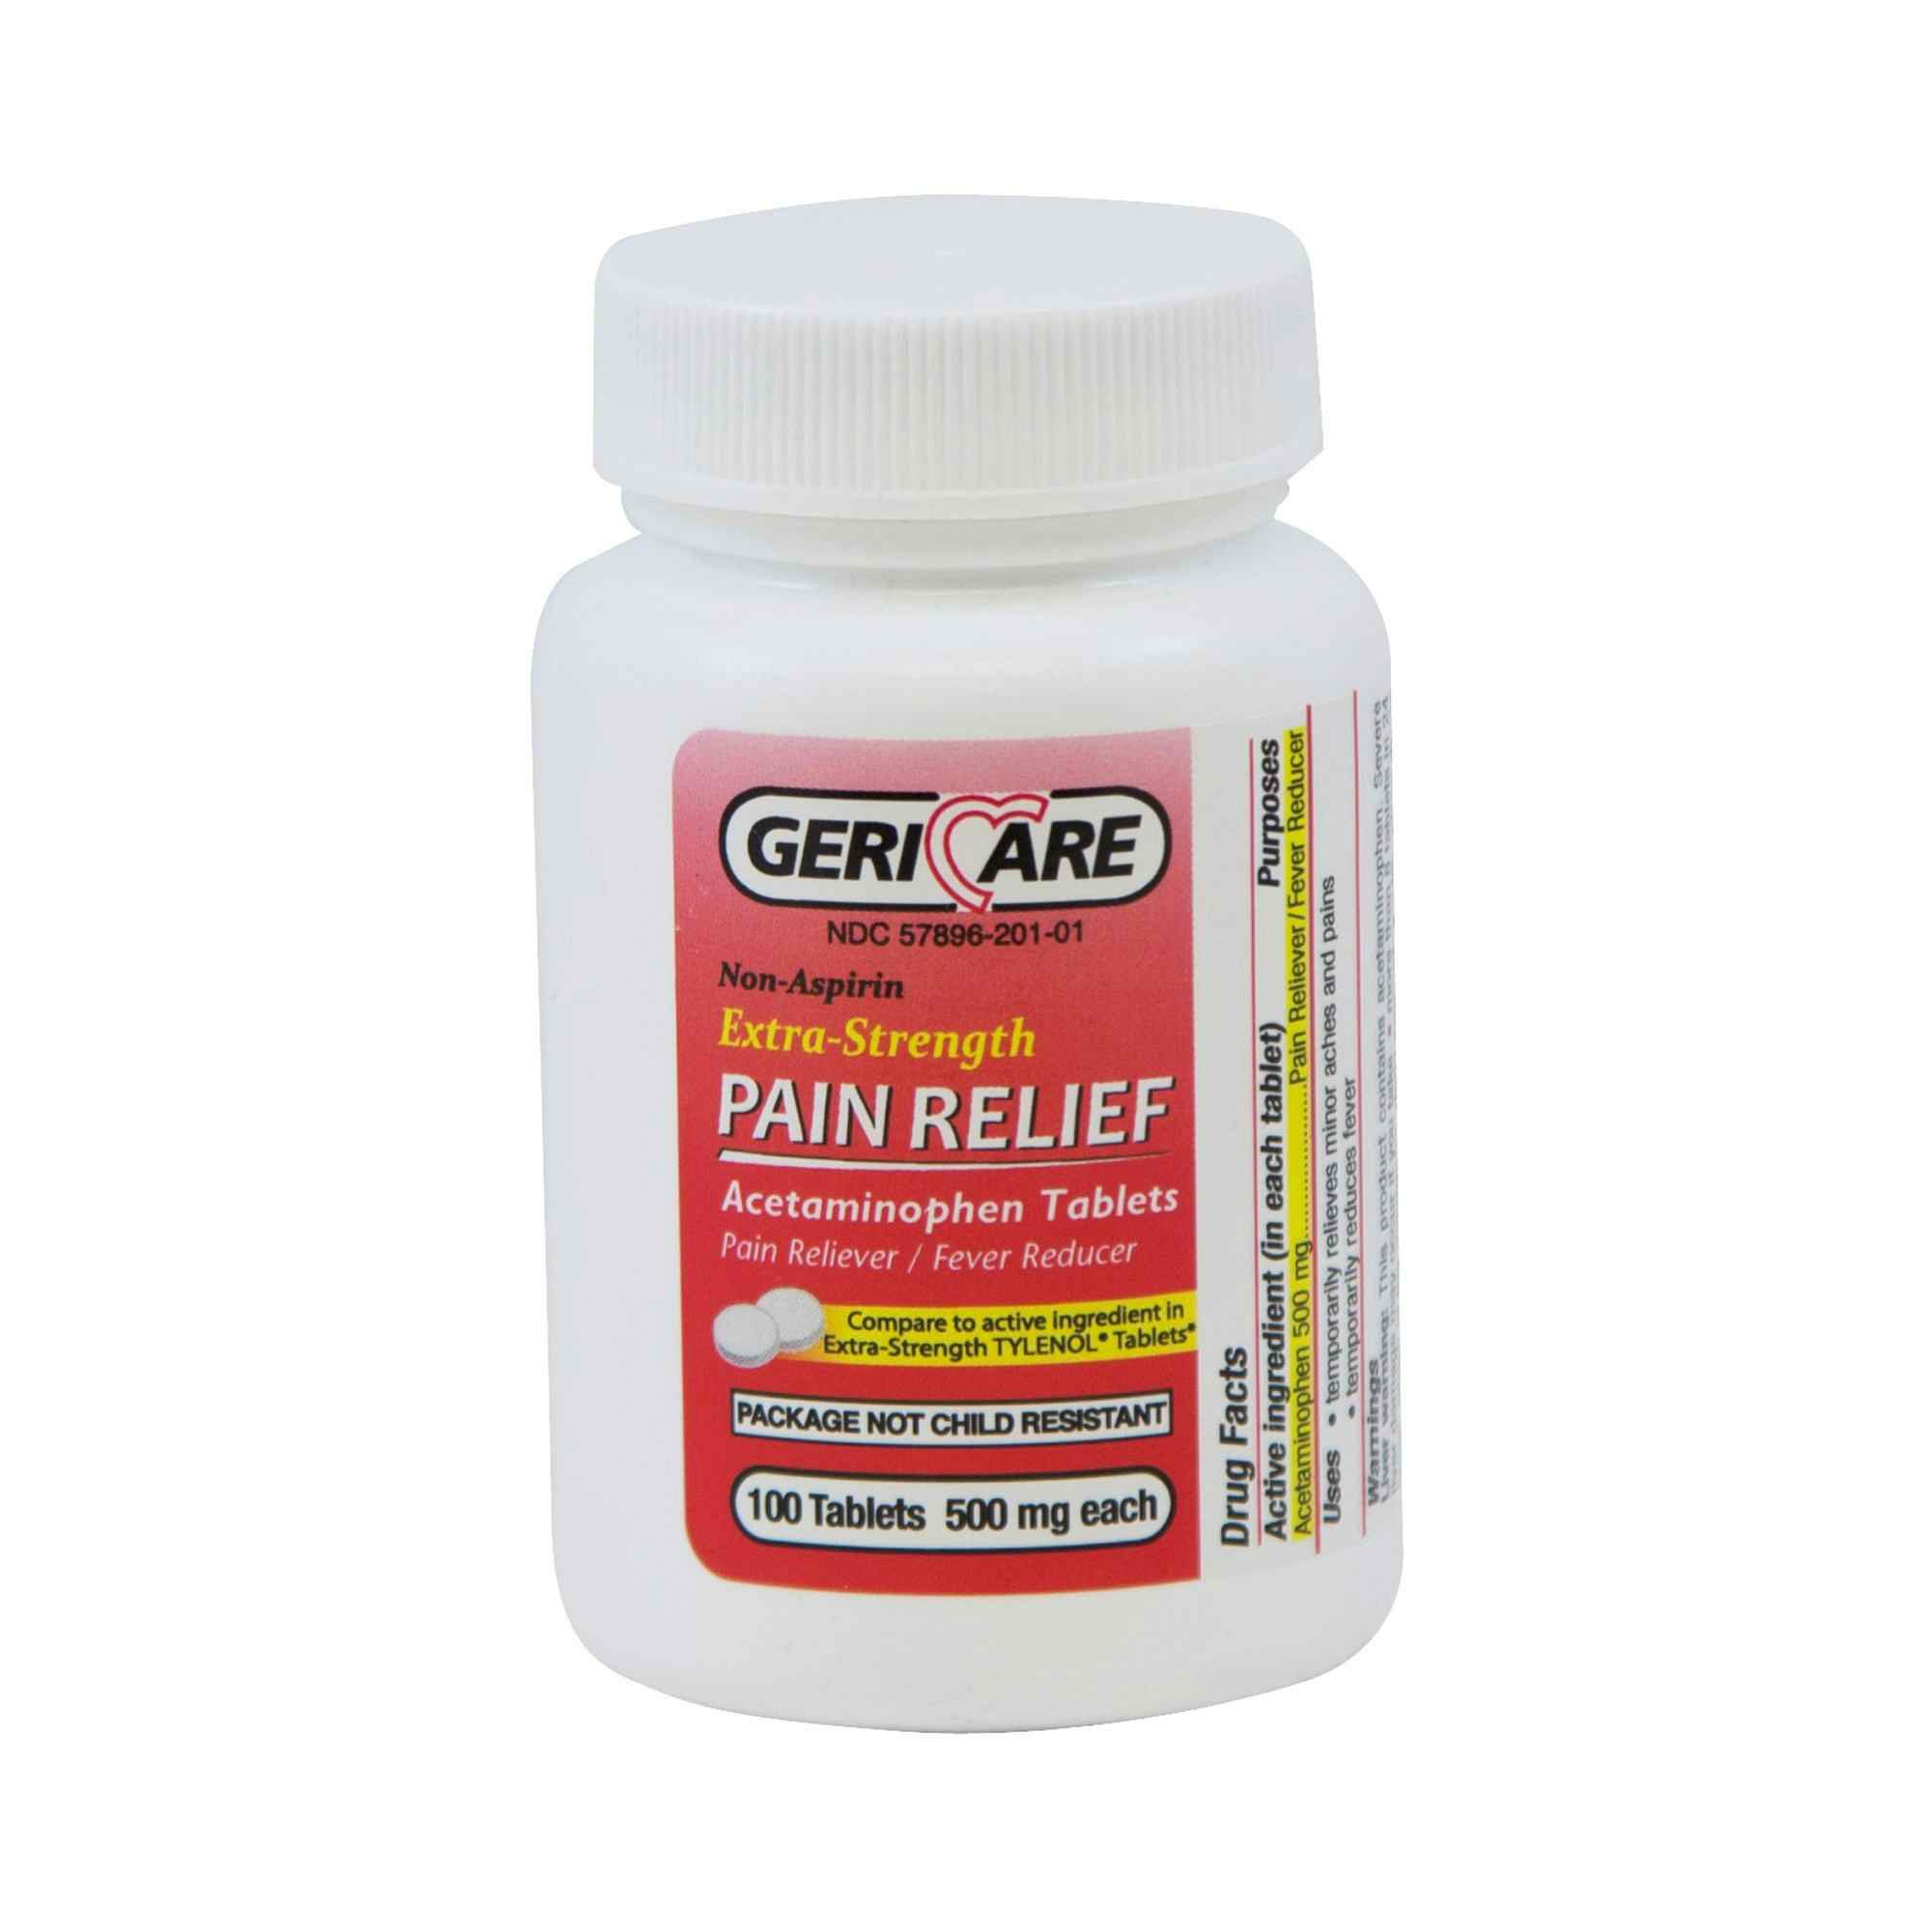 Geri-Care Non-Aspirin Extra Strength Pain Relief, 500 mg